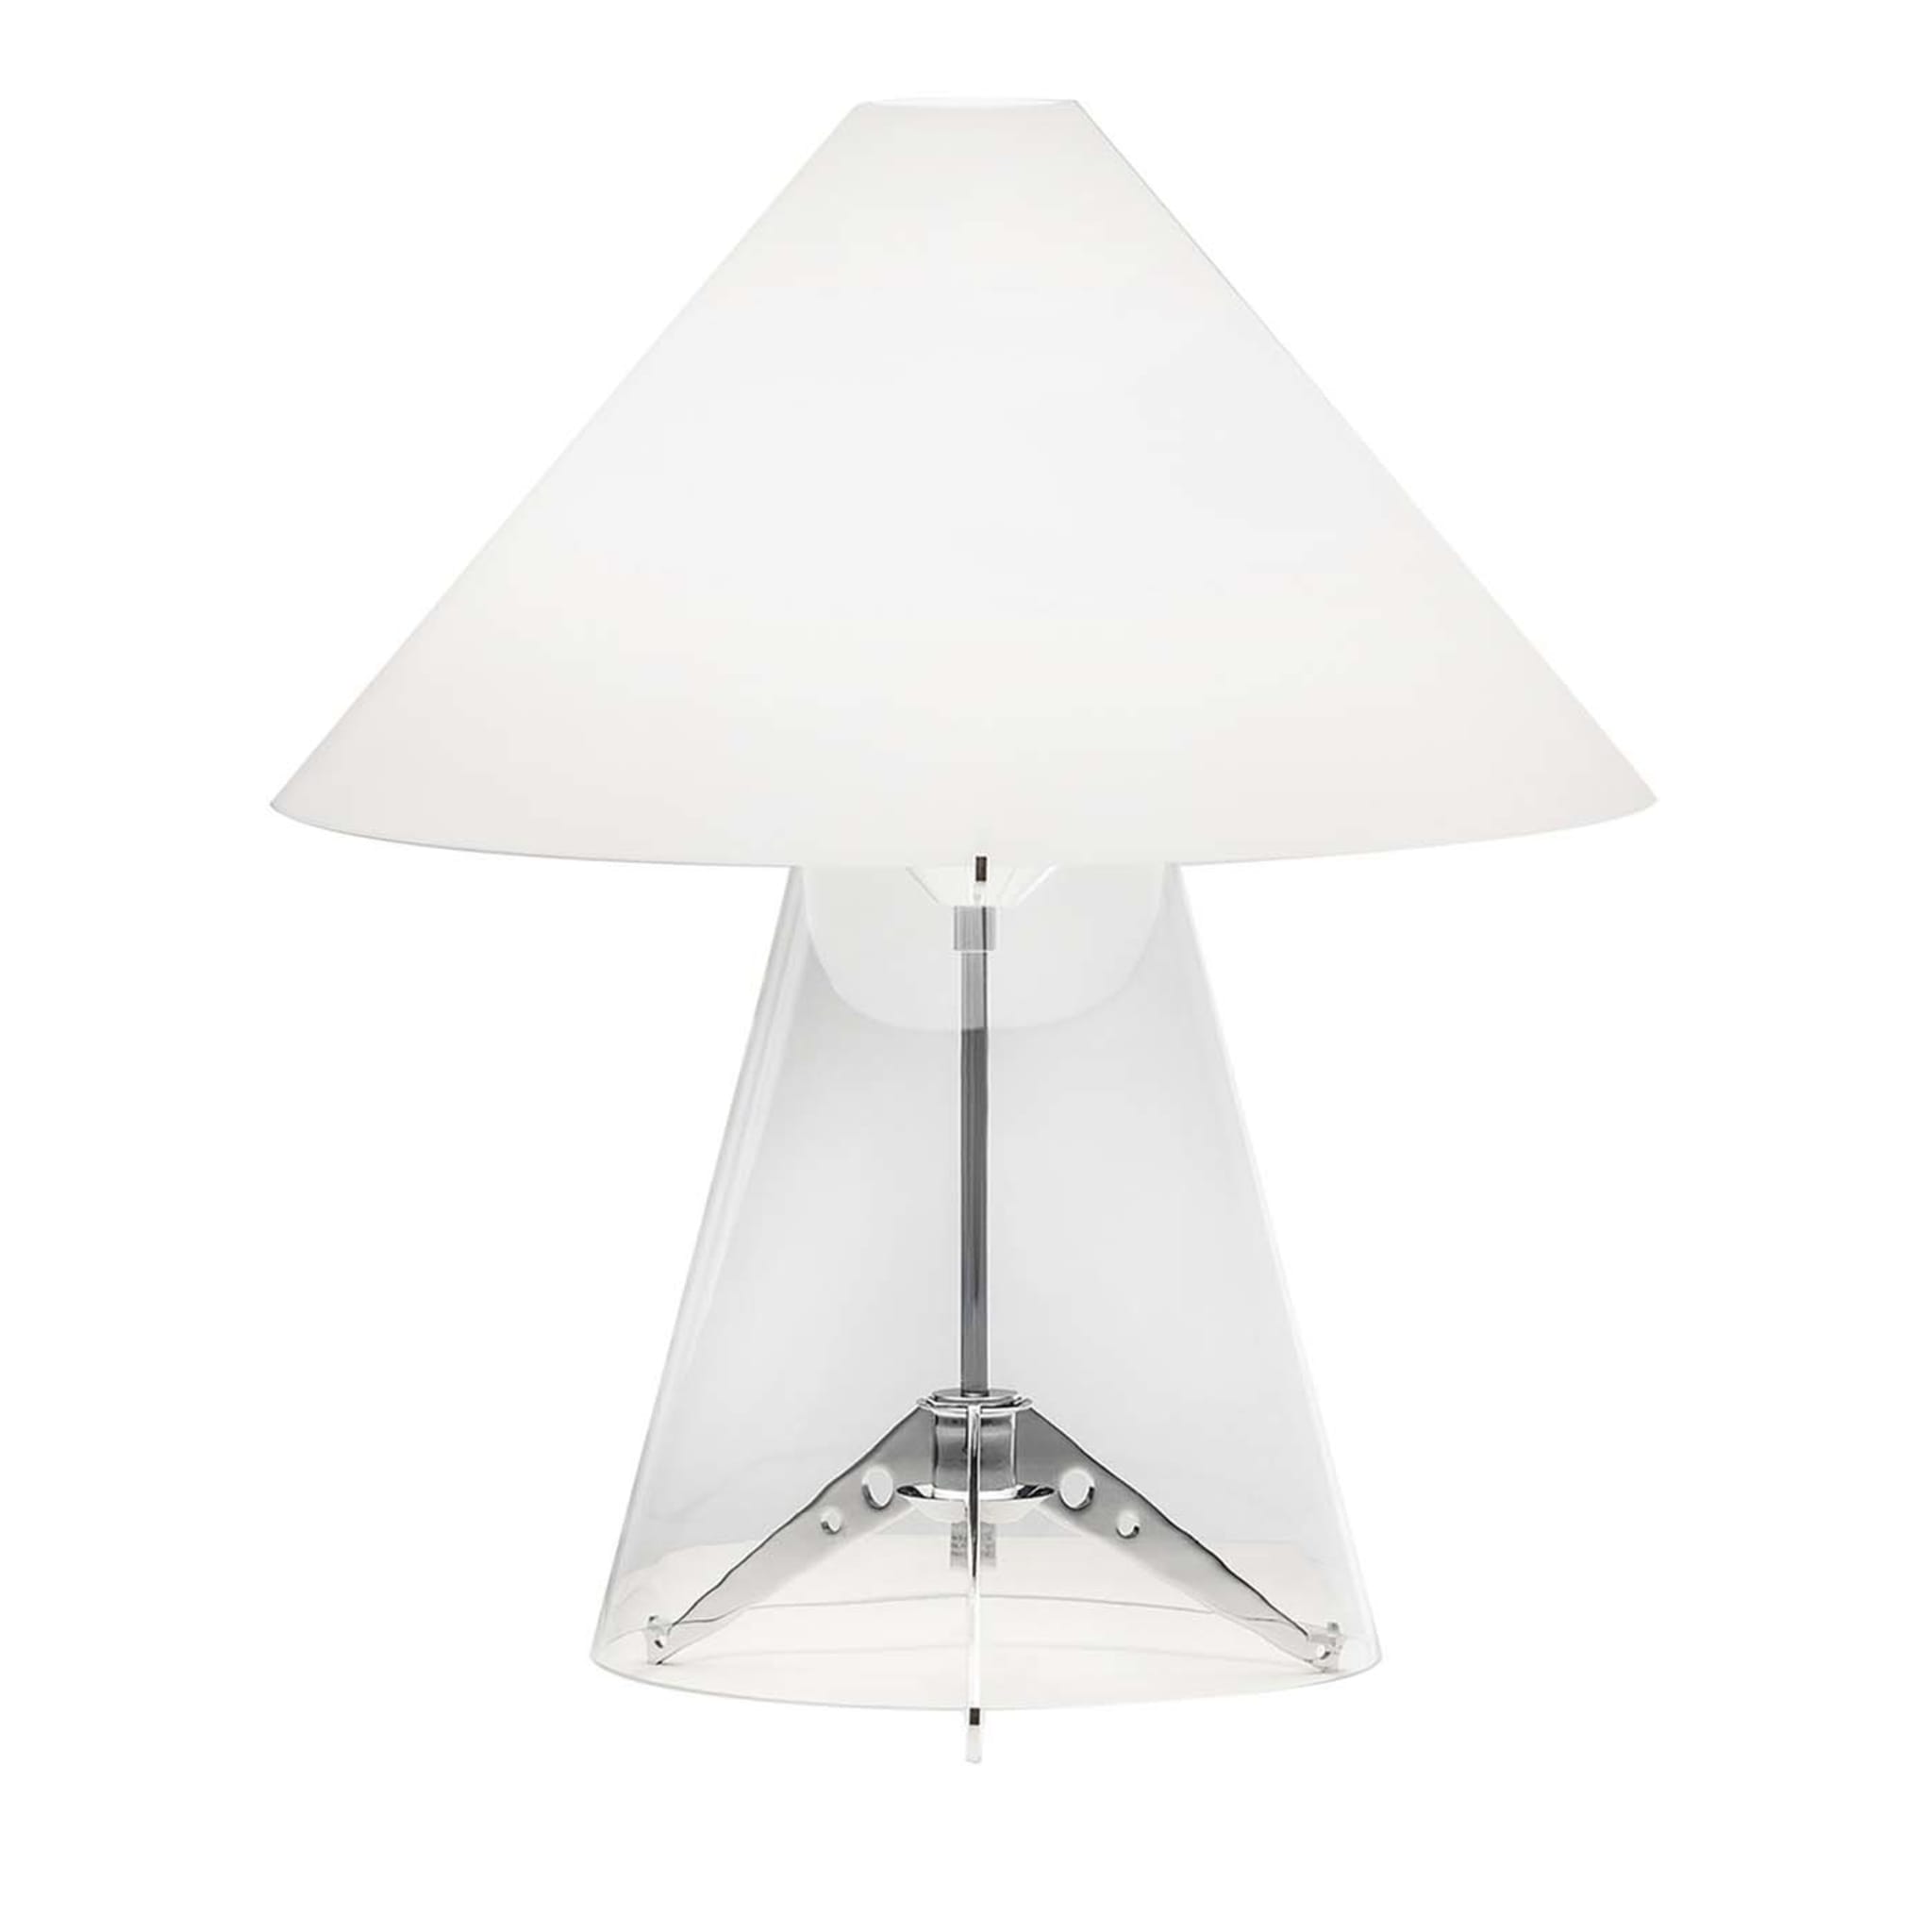 Metafora Table Lamp by Umberto Riva - Main view